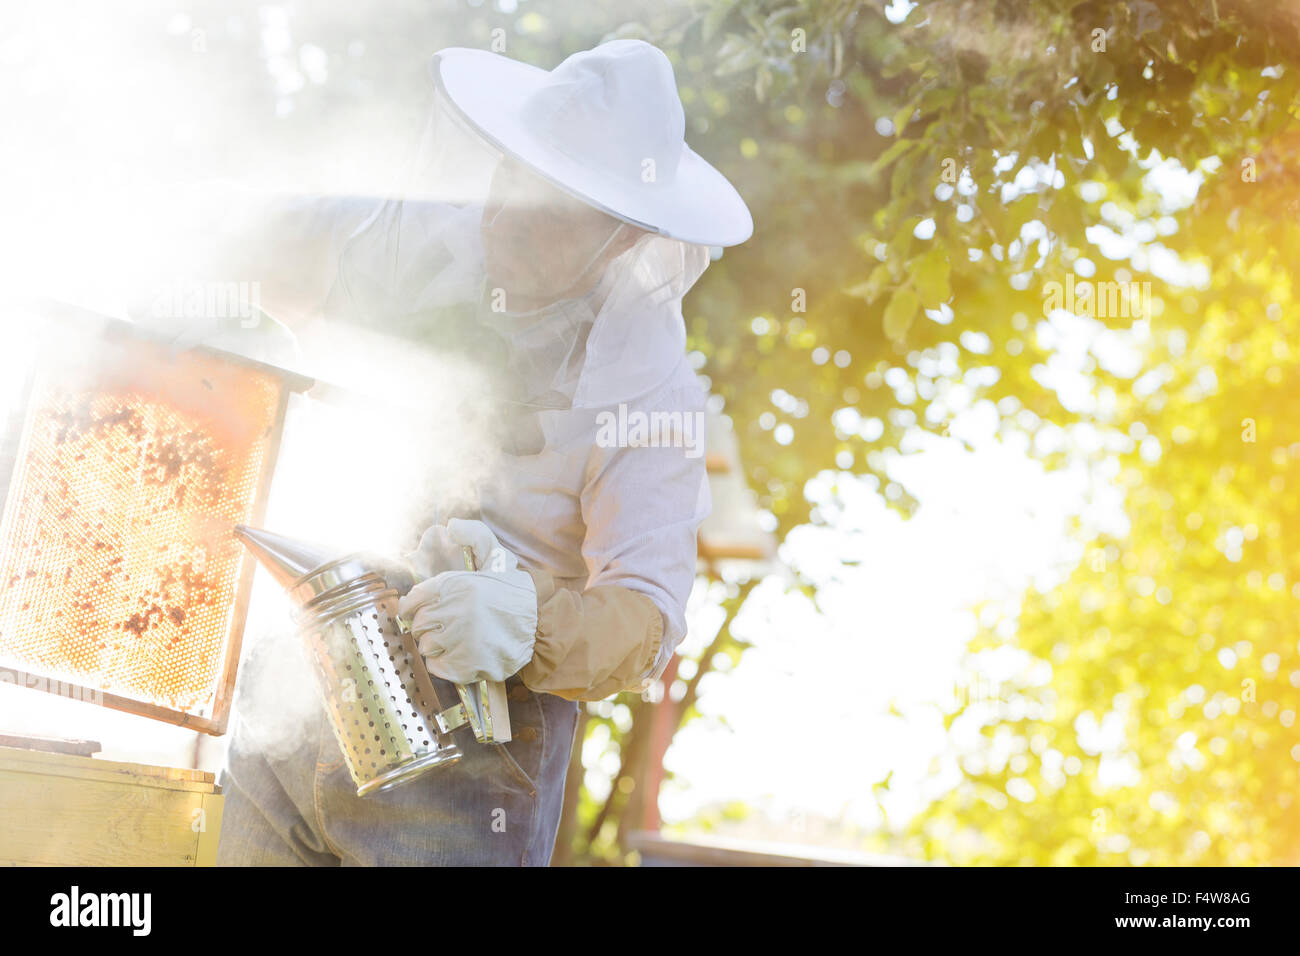 Beekeeper using smoker to calm bees Stock Photo